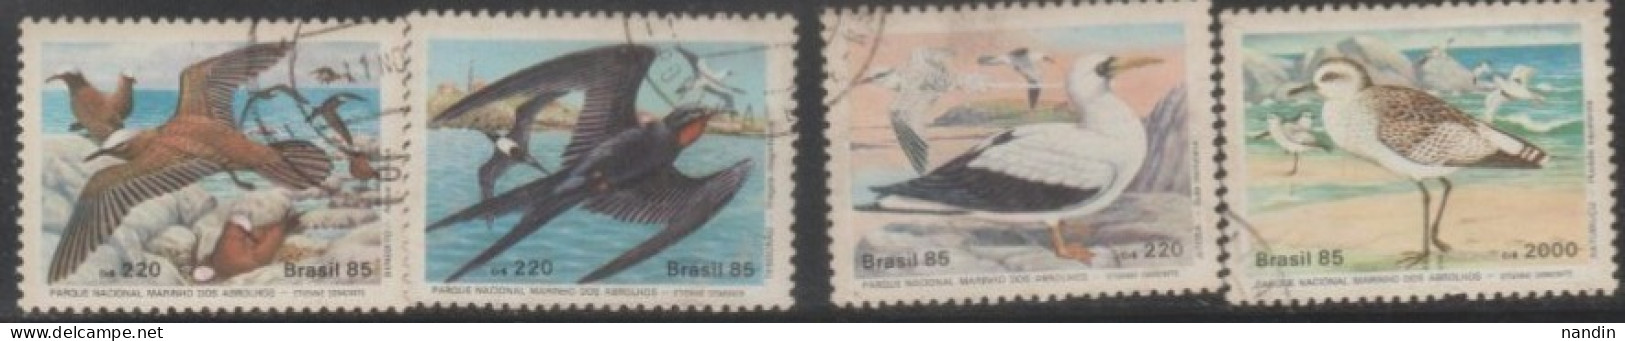 1985 BRAZIL USED STAMPS ON BIRD/ BIRDS FOUND IN NATIONAL MARINE PARK,ABROLHOS - Albatrosse & Sturmvögel